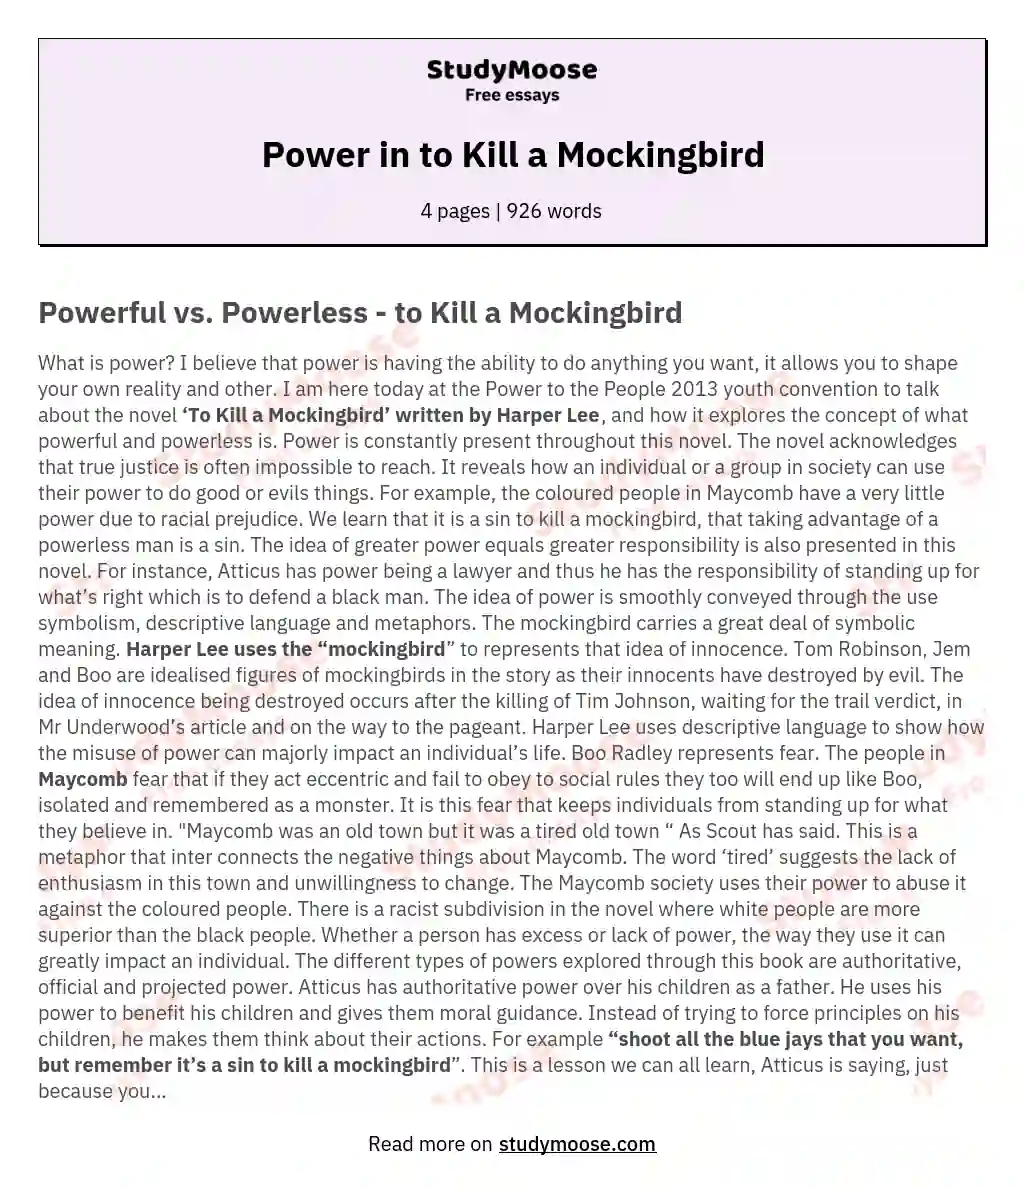 Power in to Kill a Mockingbird